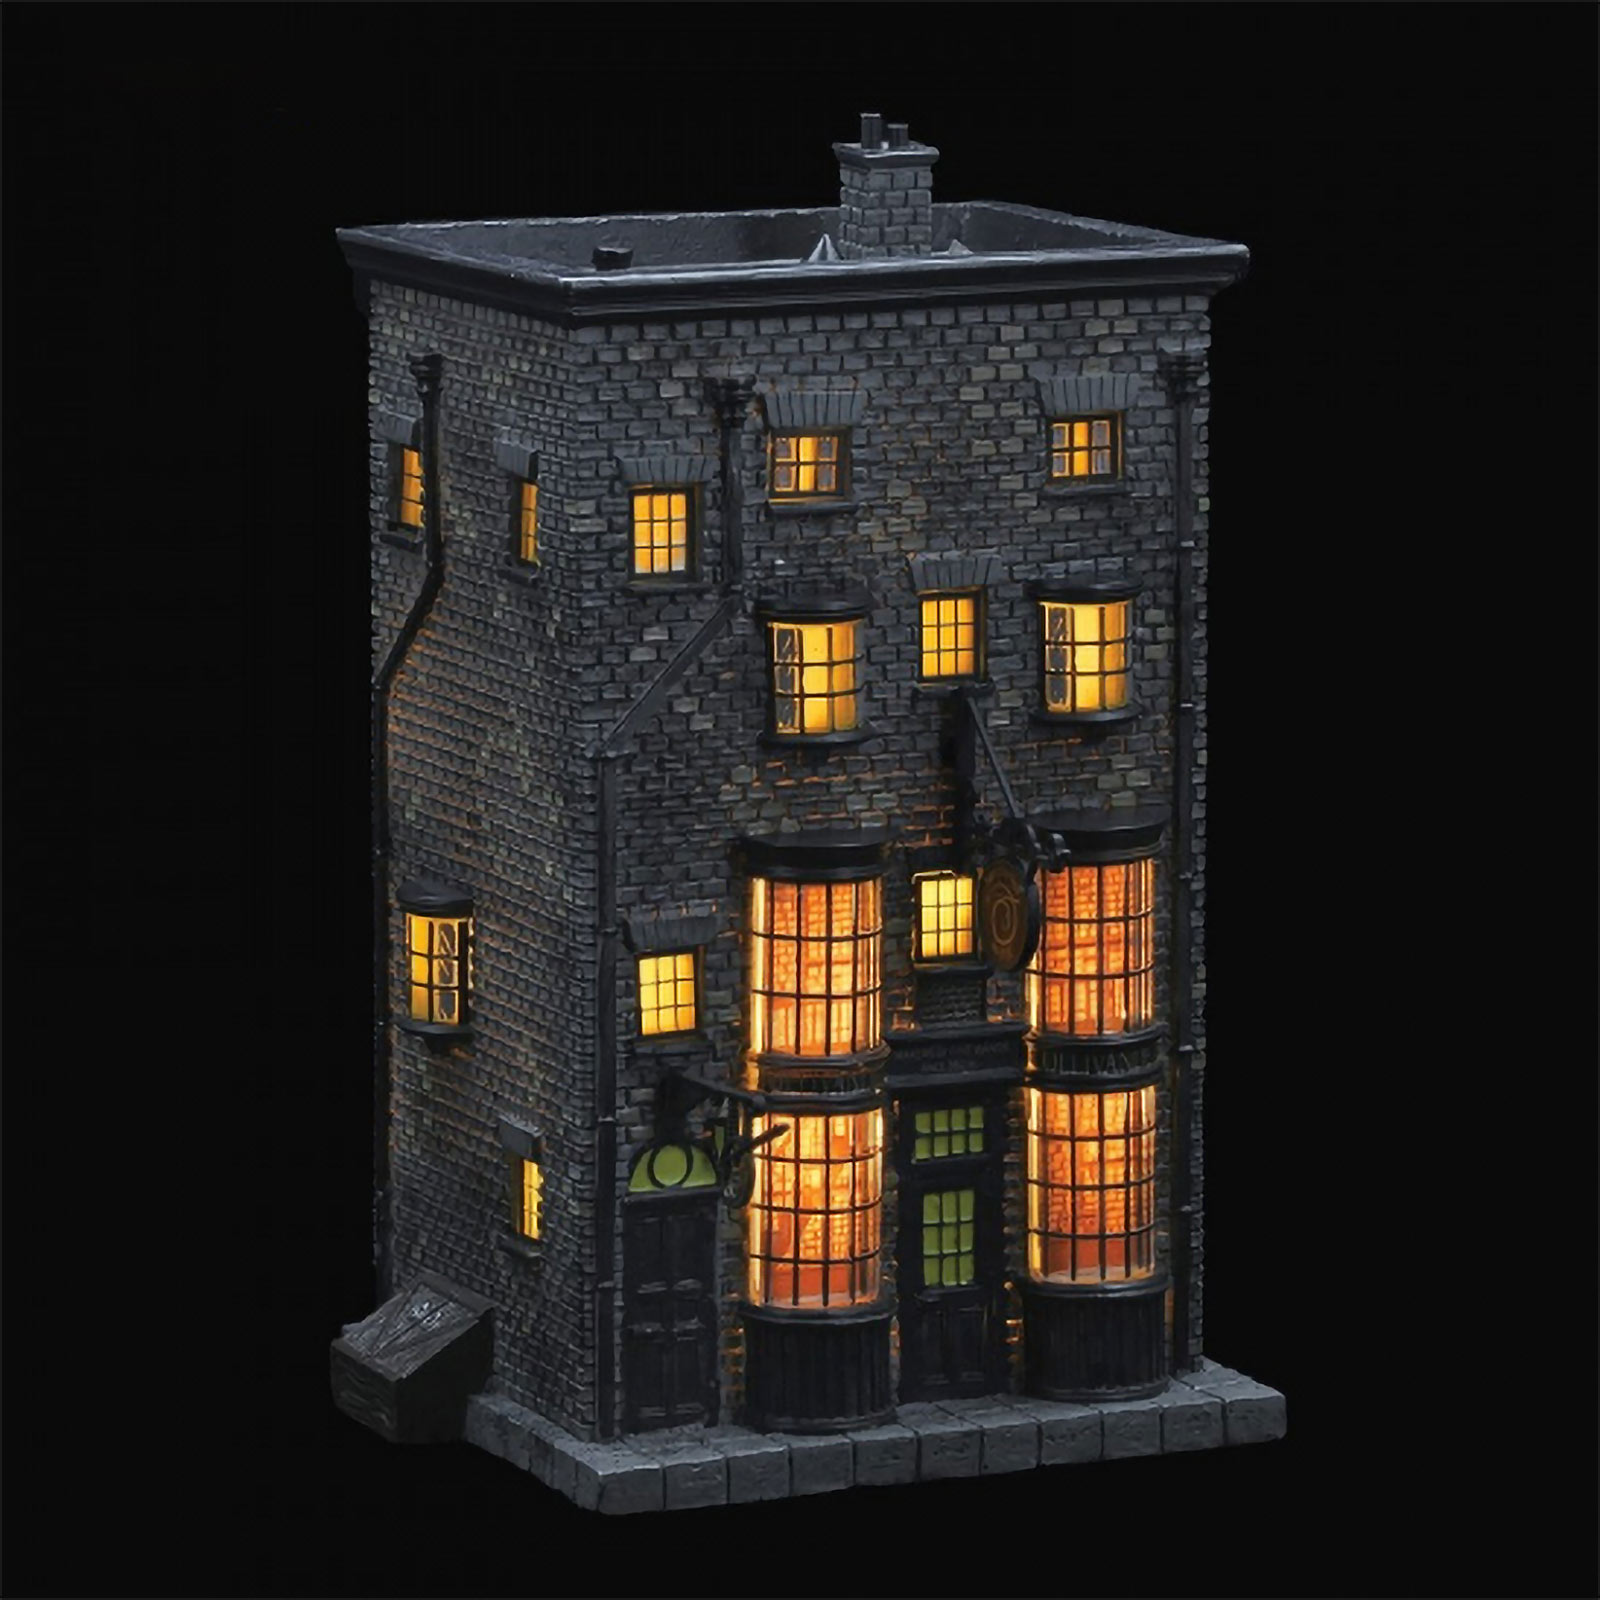 Ollivanders wand store miniature replica with lighting - Harry Potter